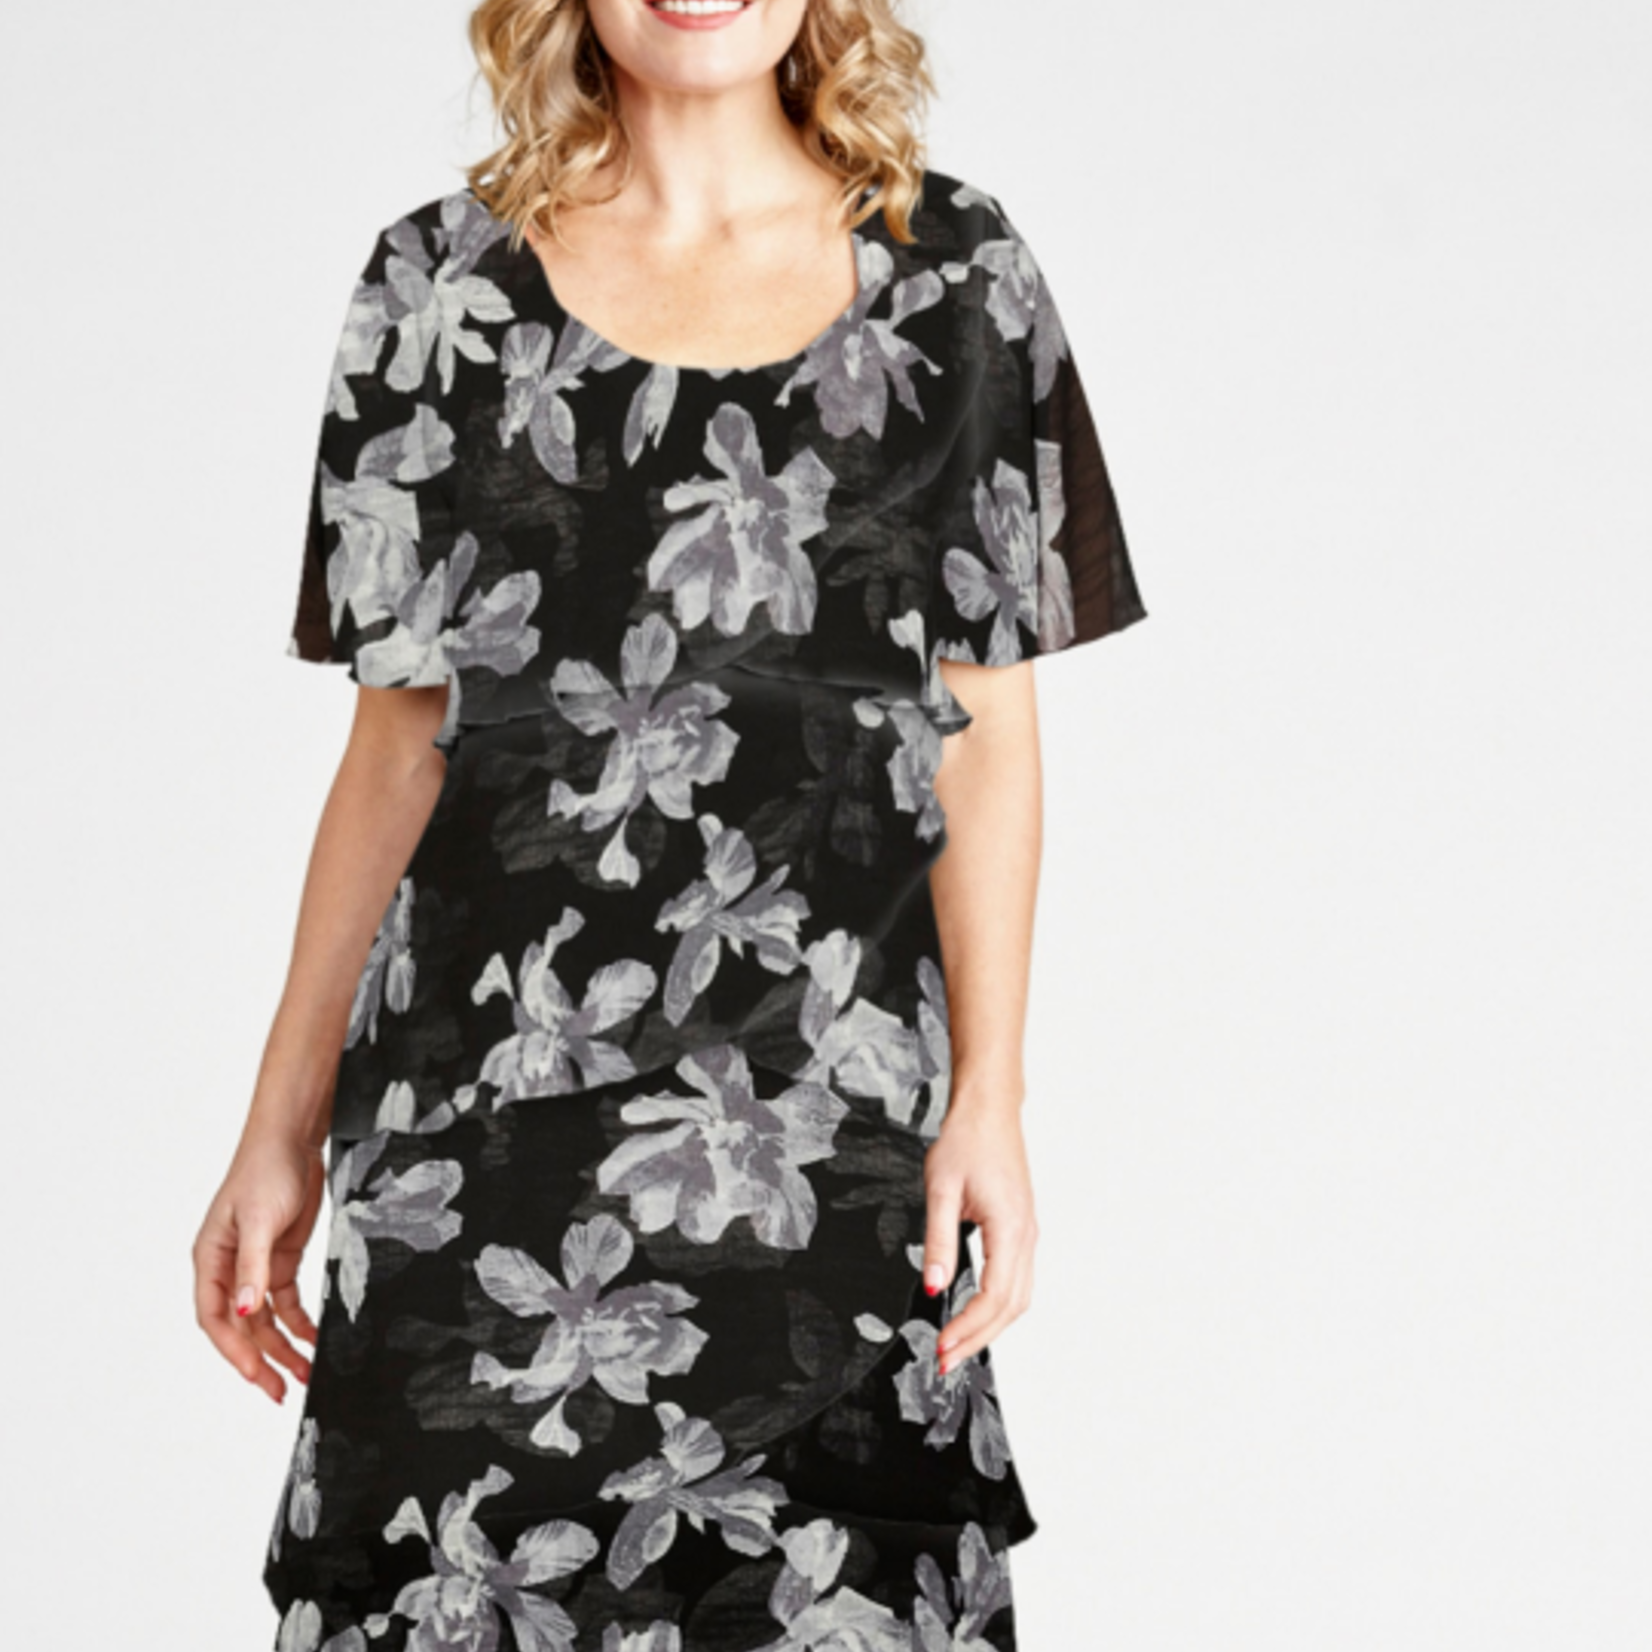 Vivid International Black & White Floral Layered Short Sleeve Dress